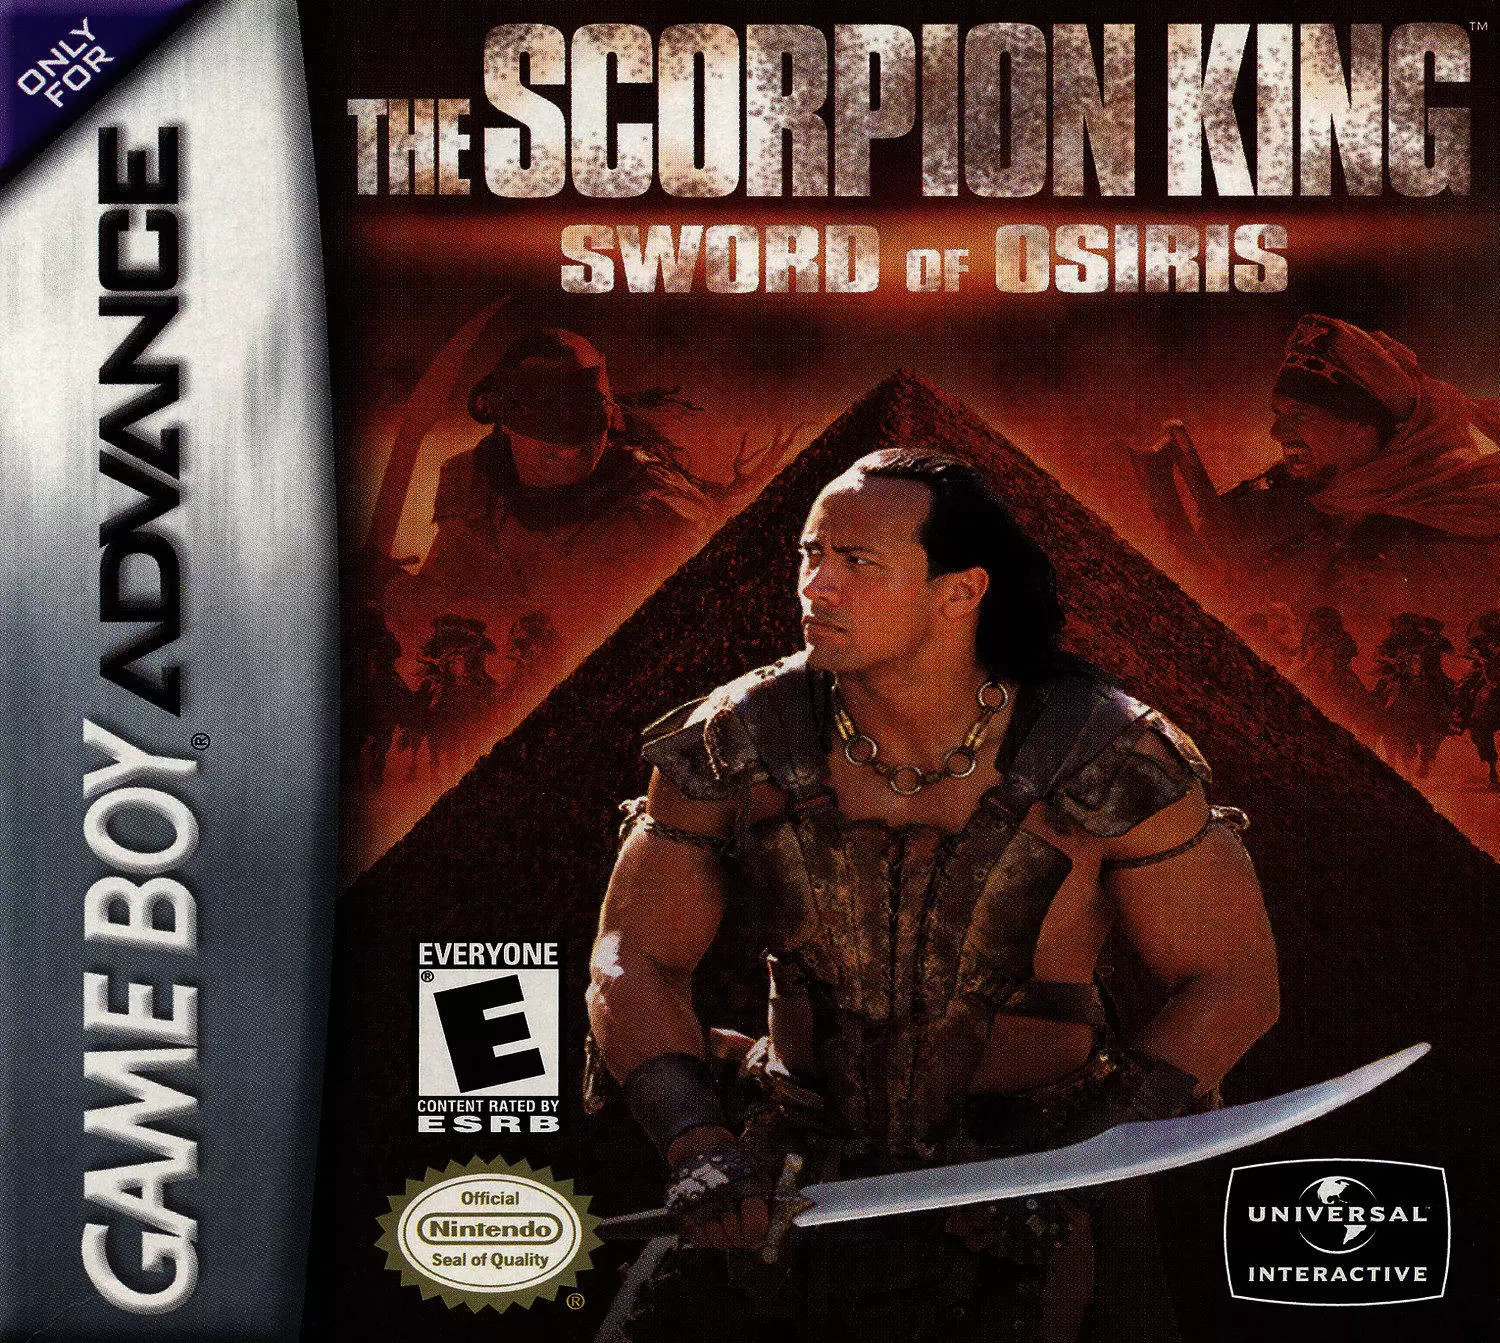 Game Boy Advance Games - The Scorpion King: Sword of Osiris